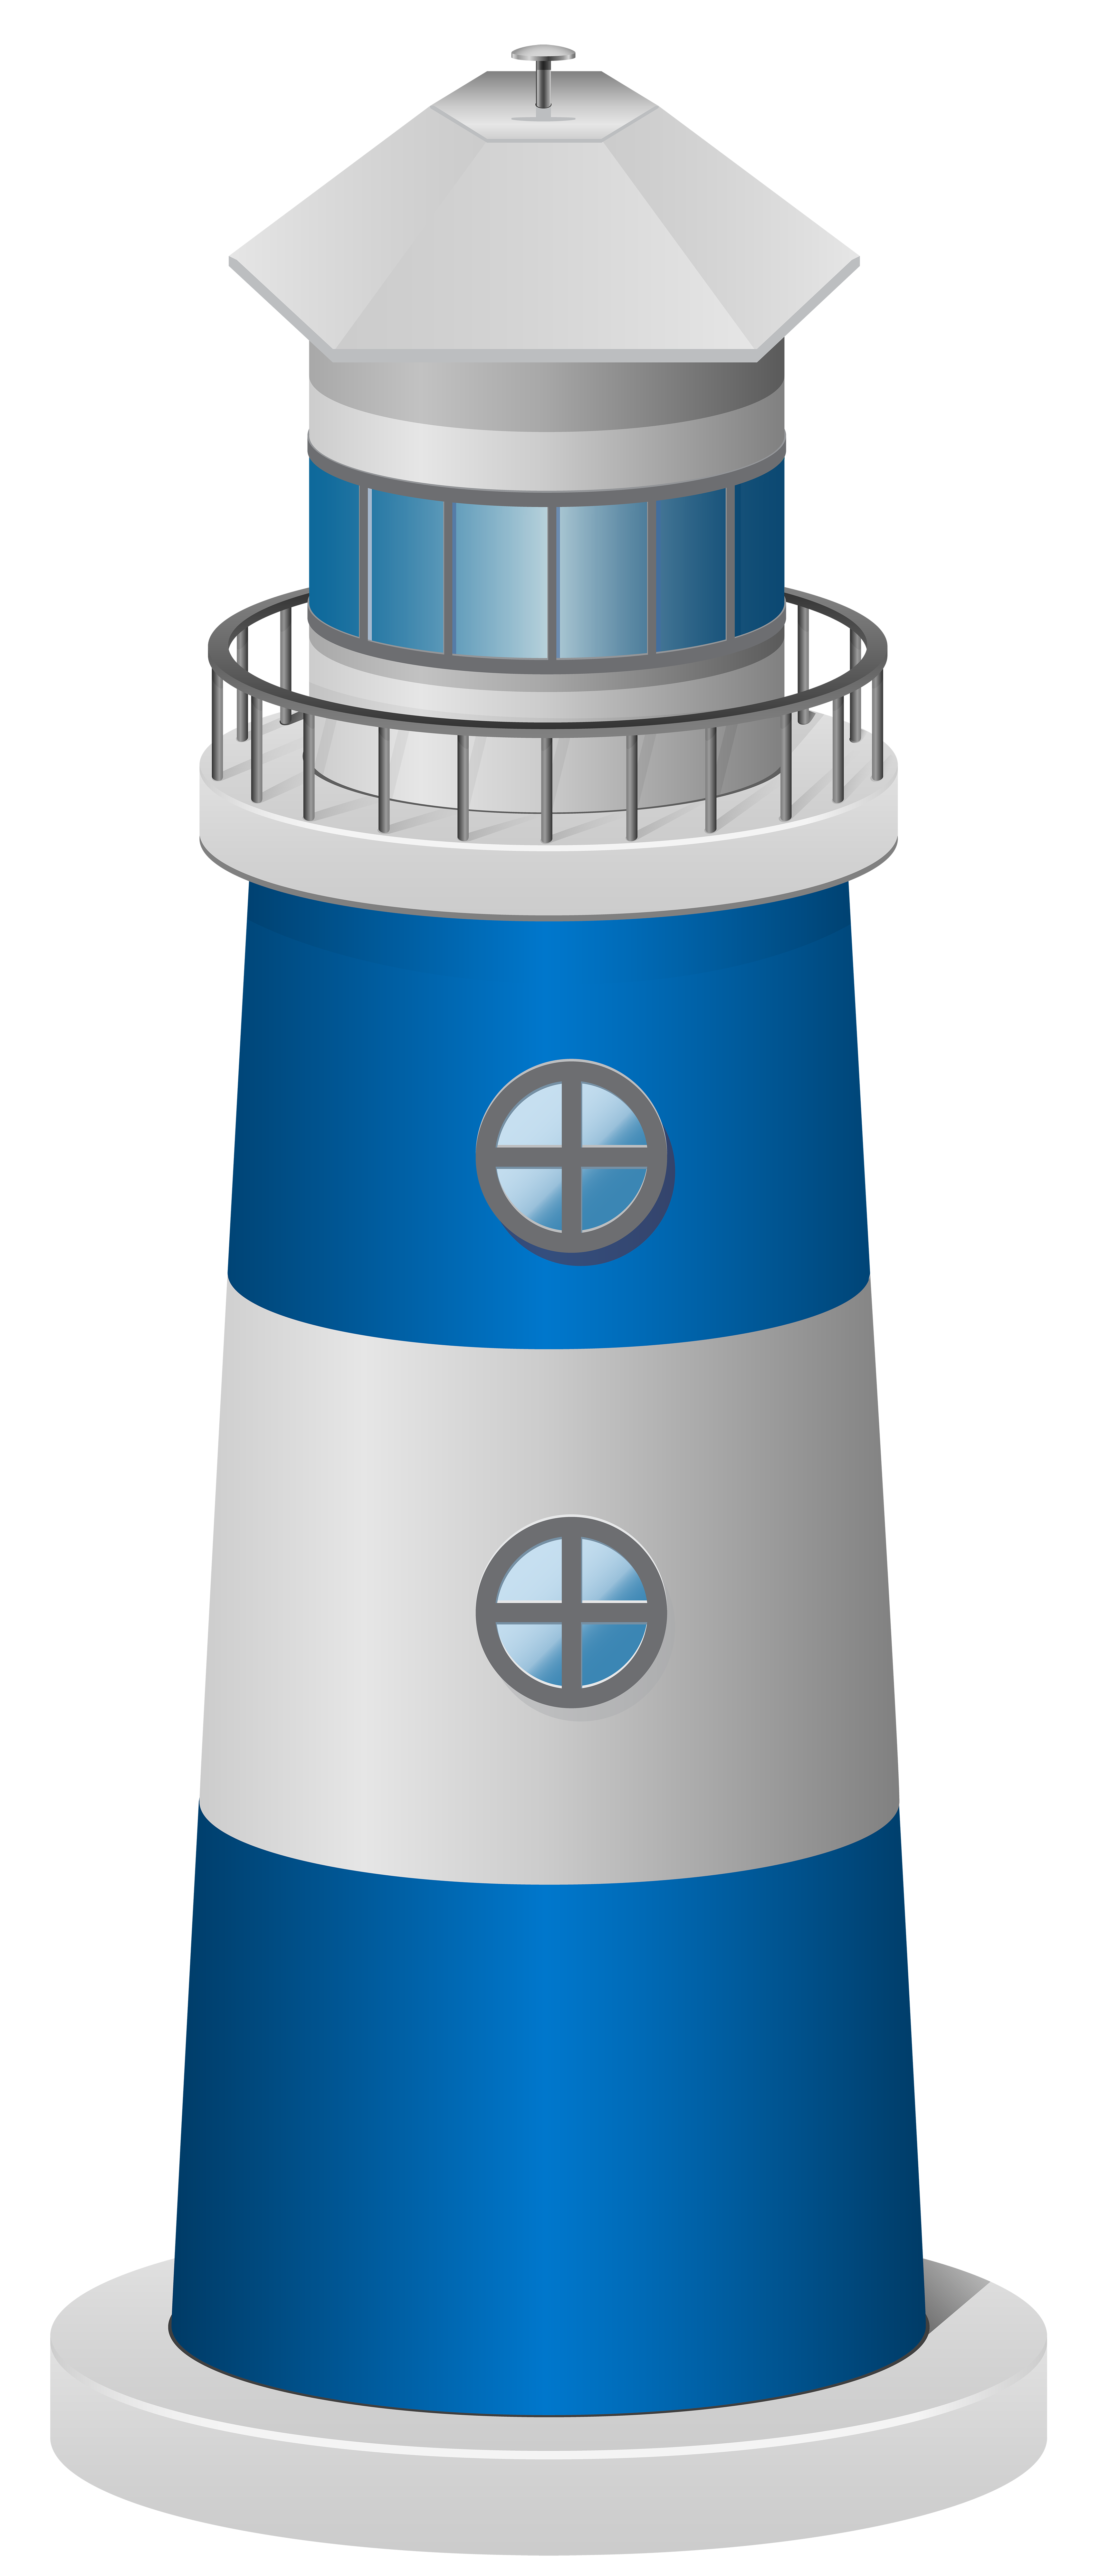 Lighthouse clipart blue lighthouse, Lighthouse blue lighthouse